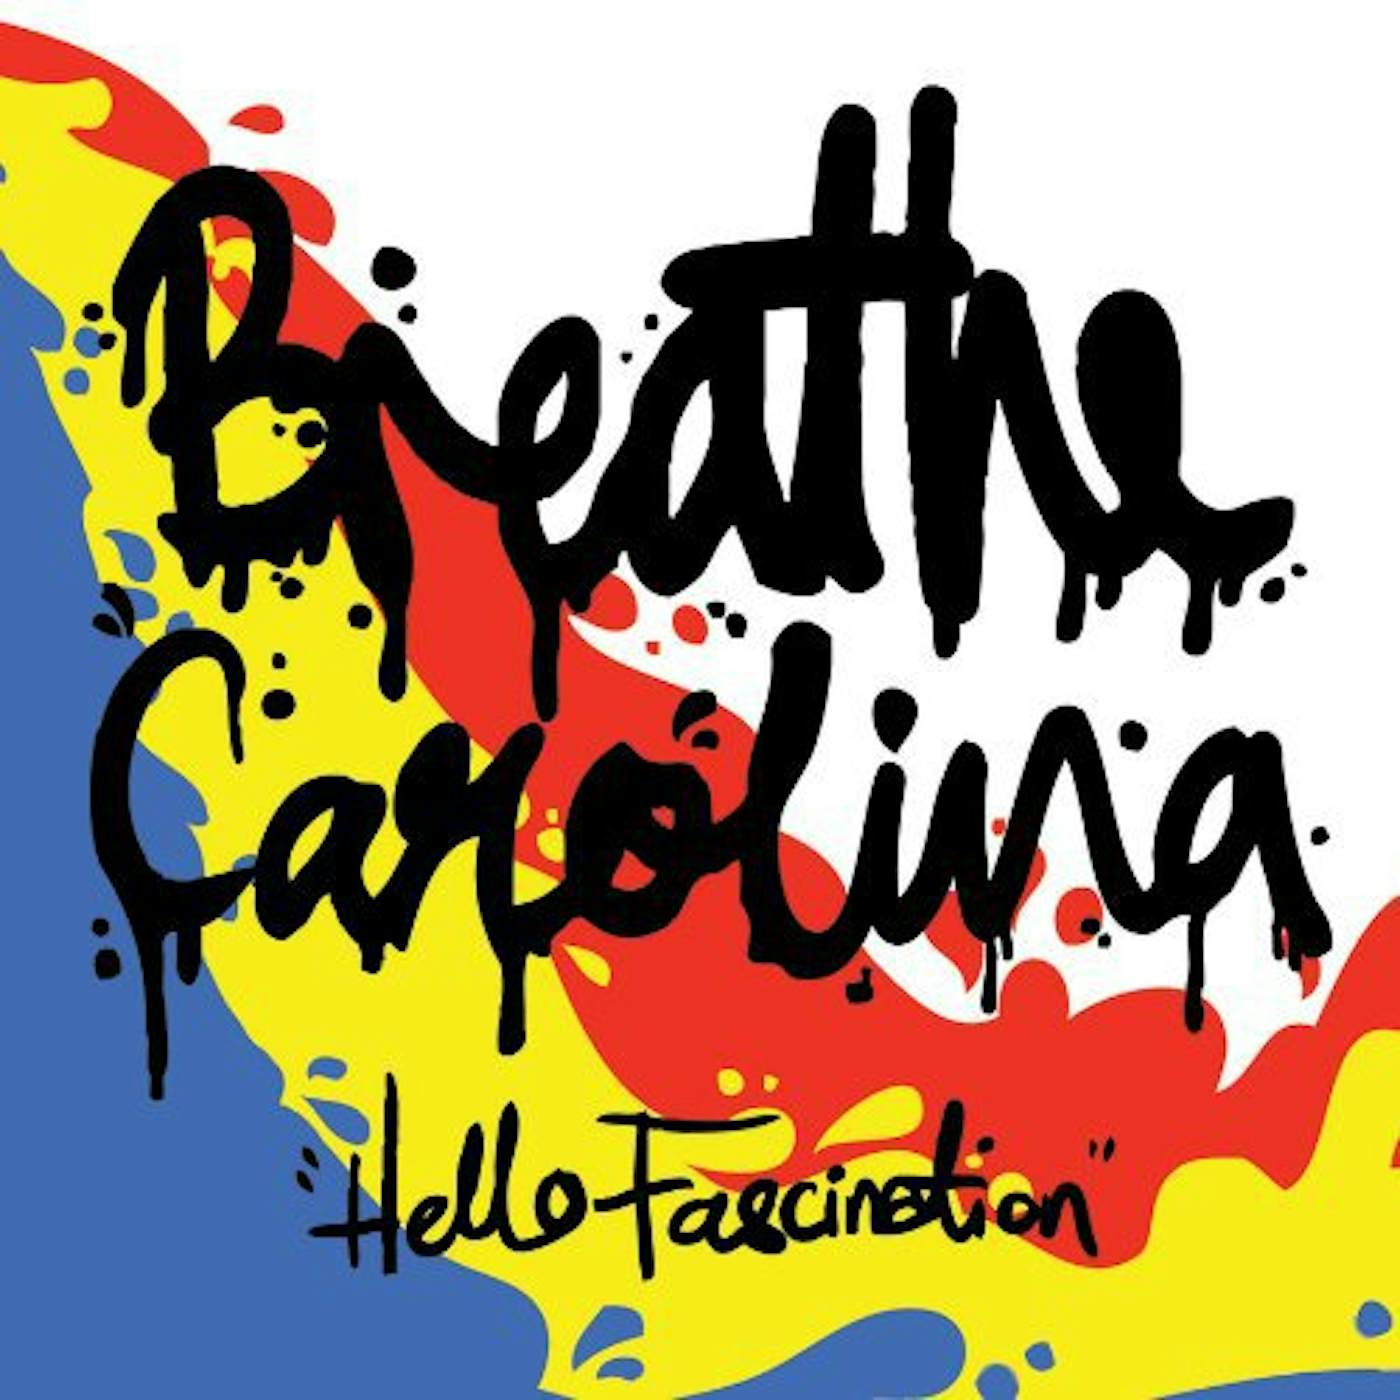 Breathe Carolina Hello Fascination Vinyl Record